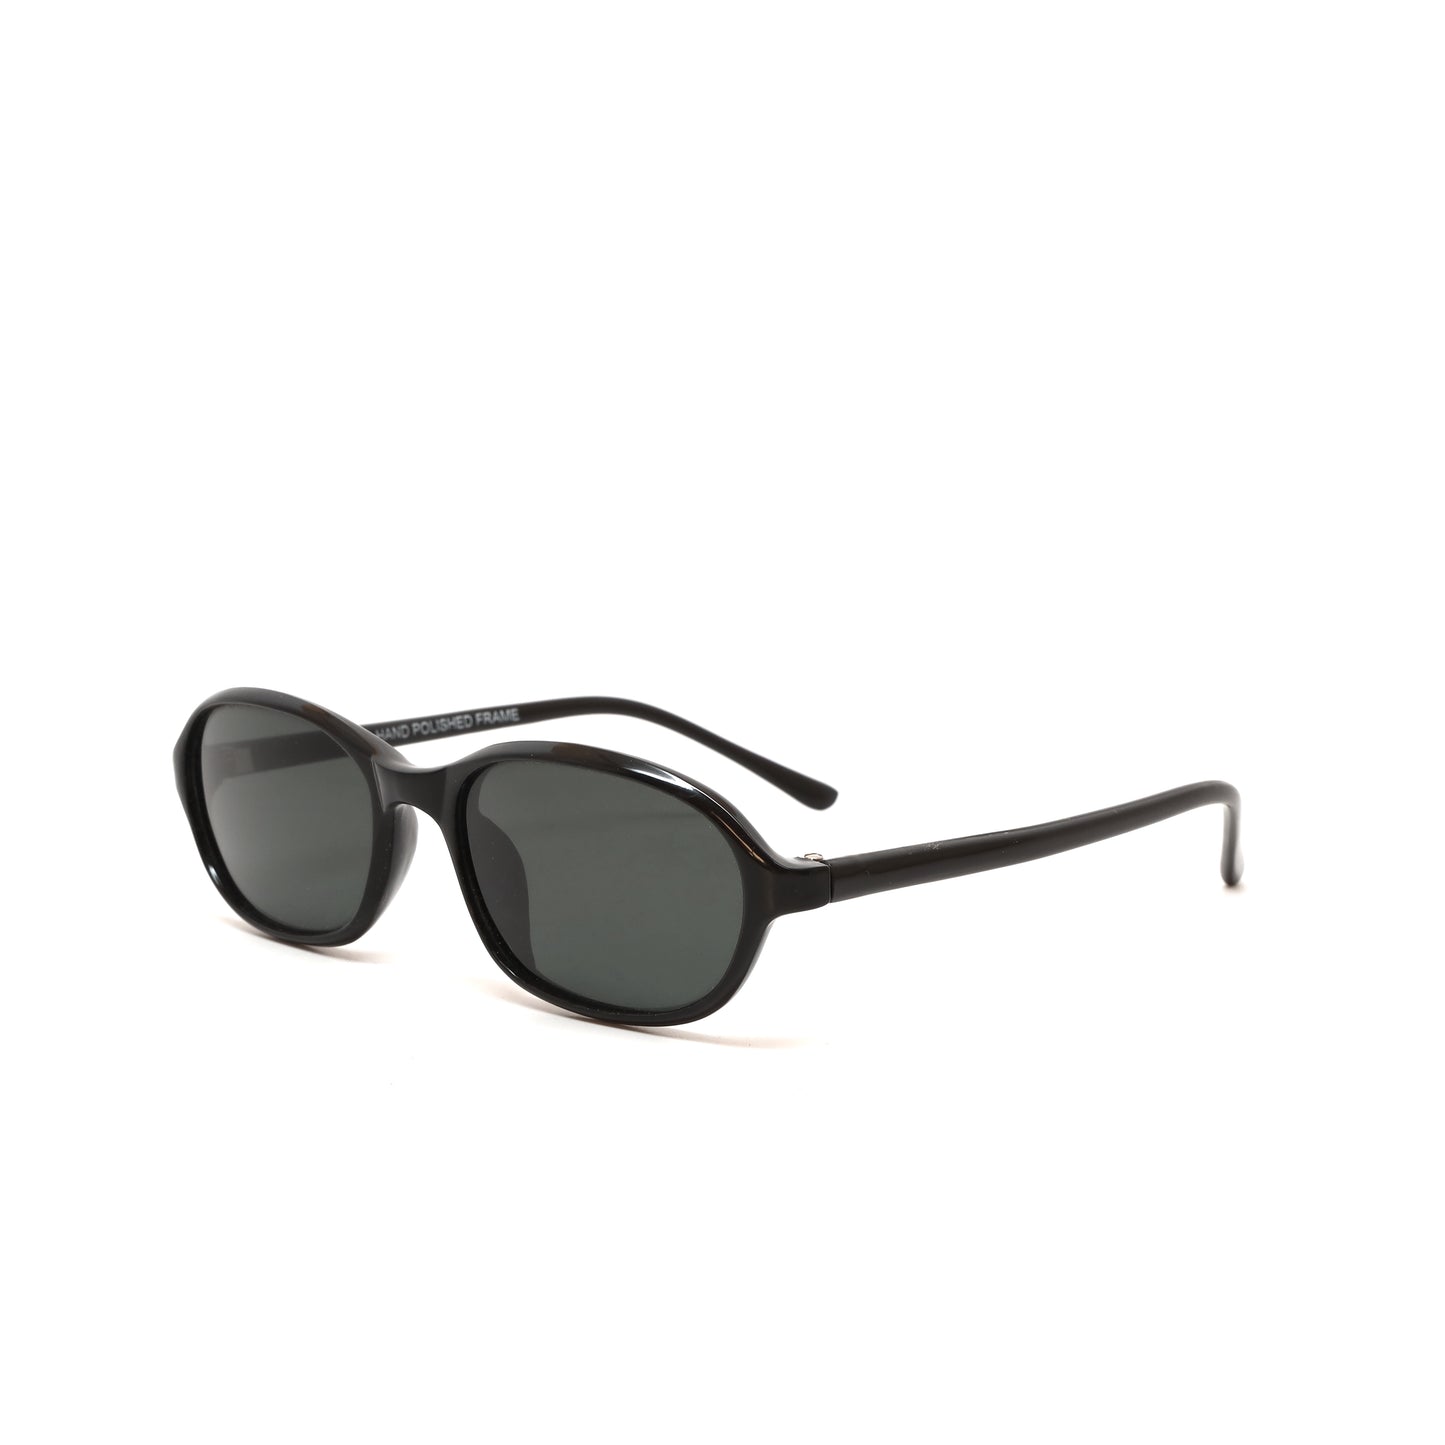 //Style 41// Vintage Standard 90s Oval Frame Sunglasses - Black